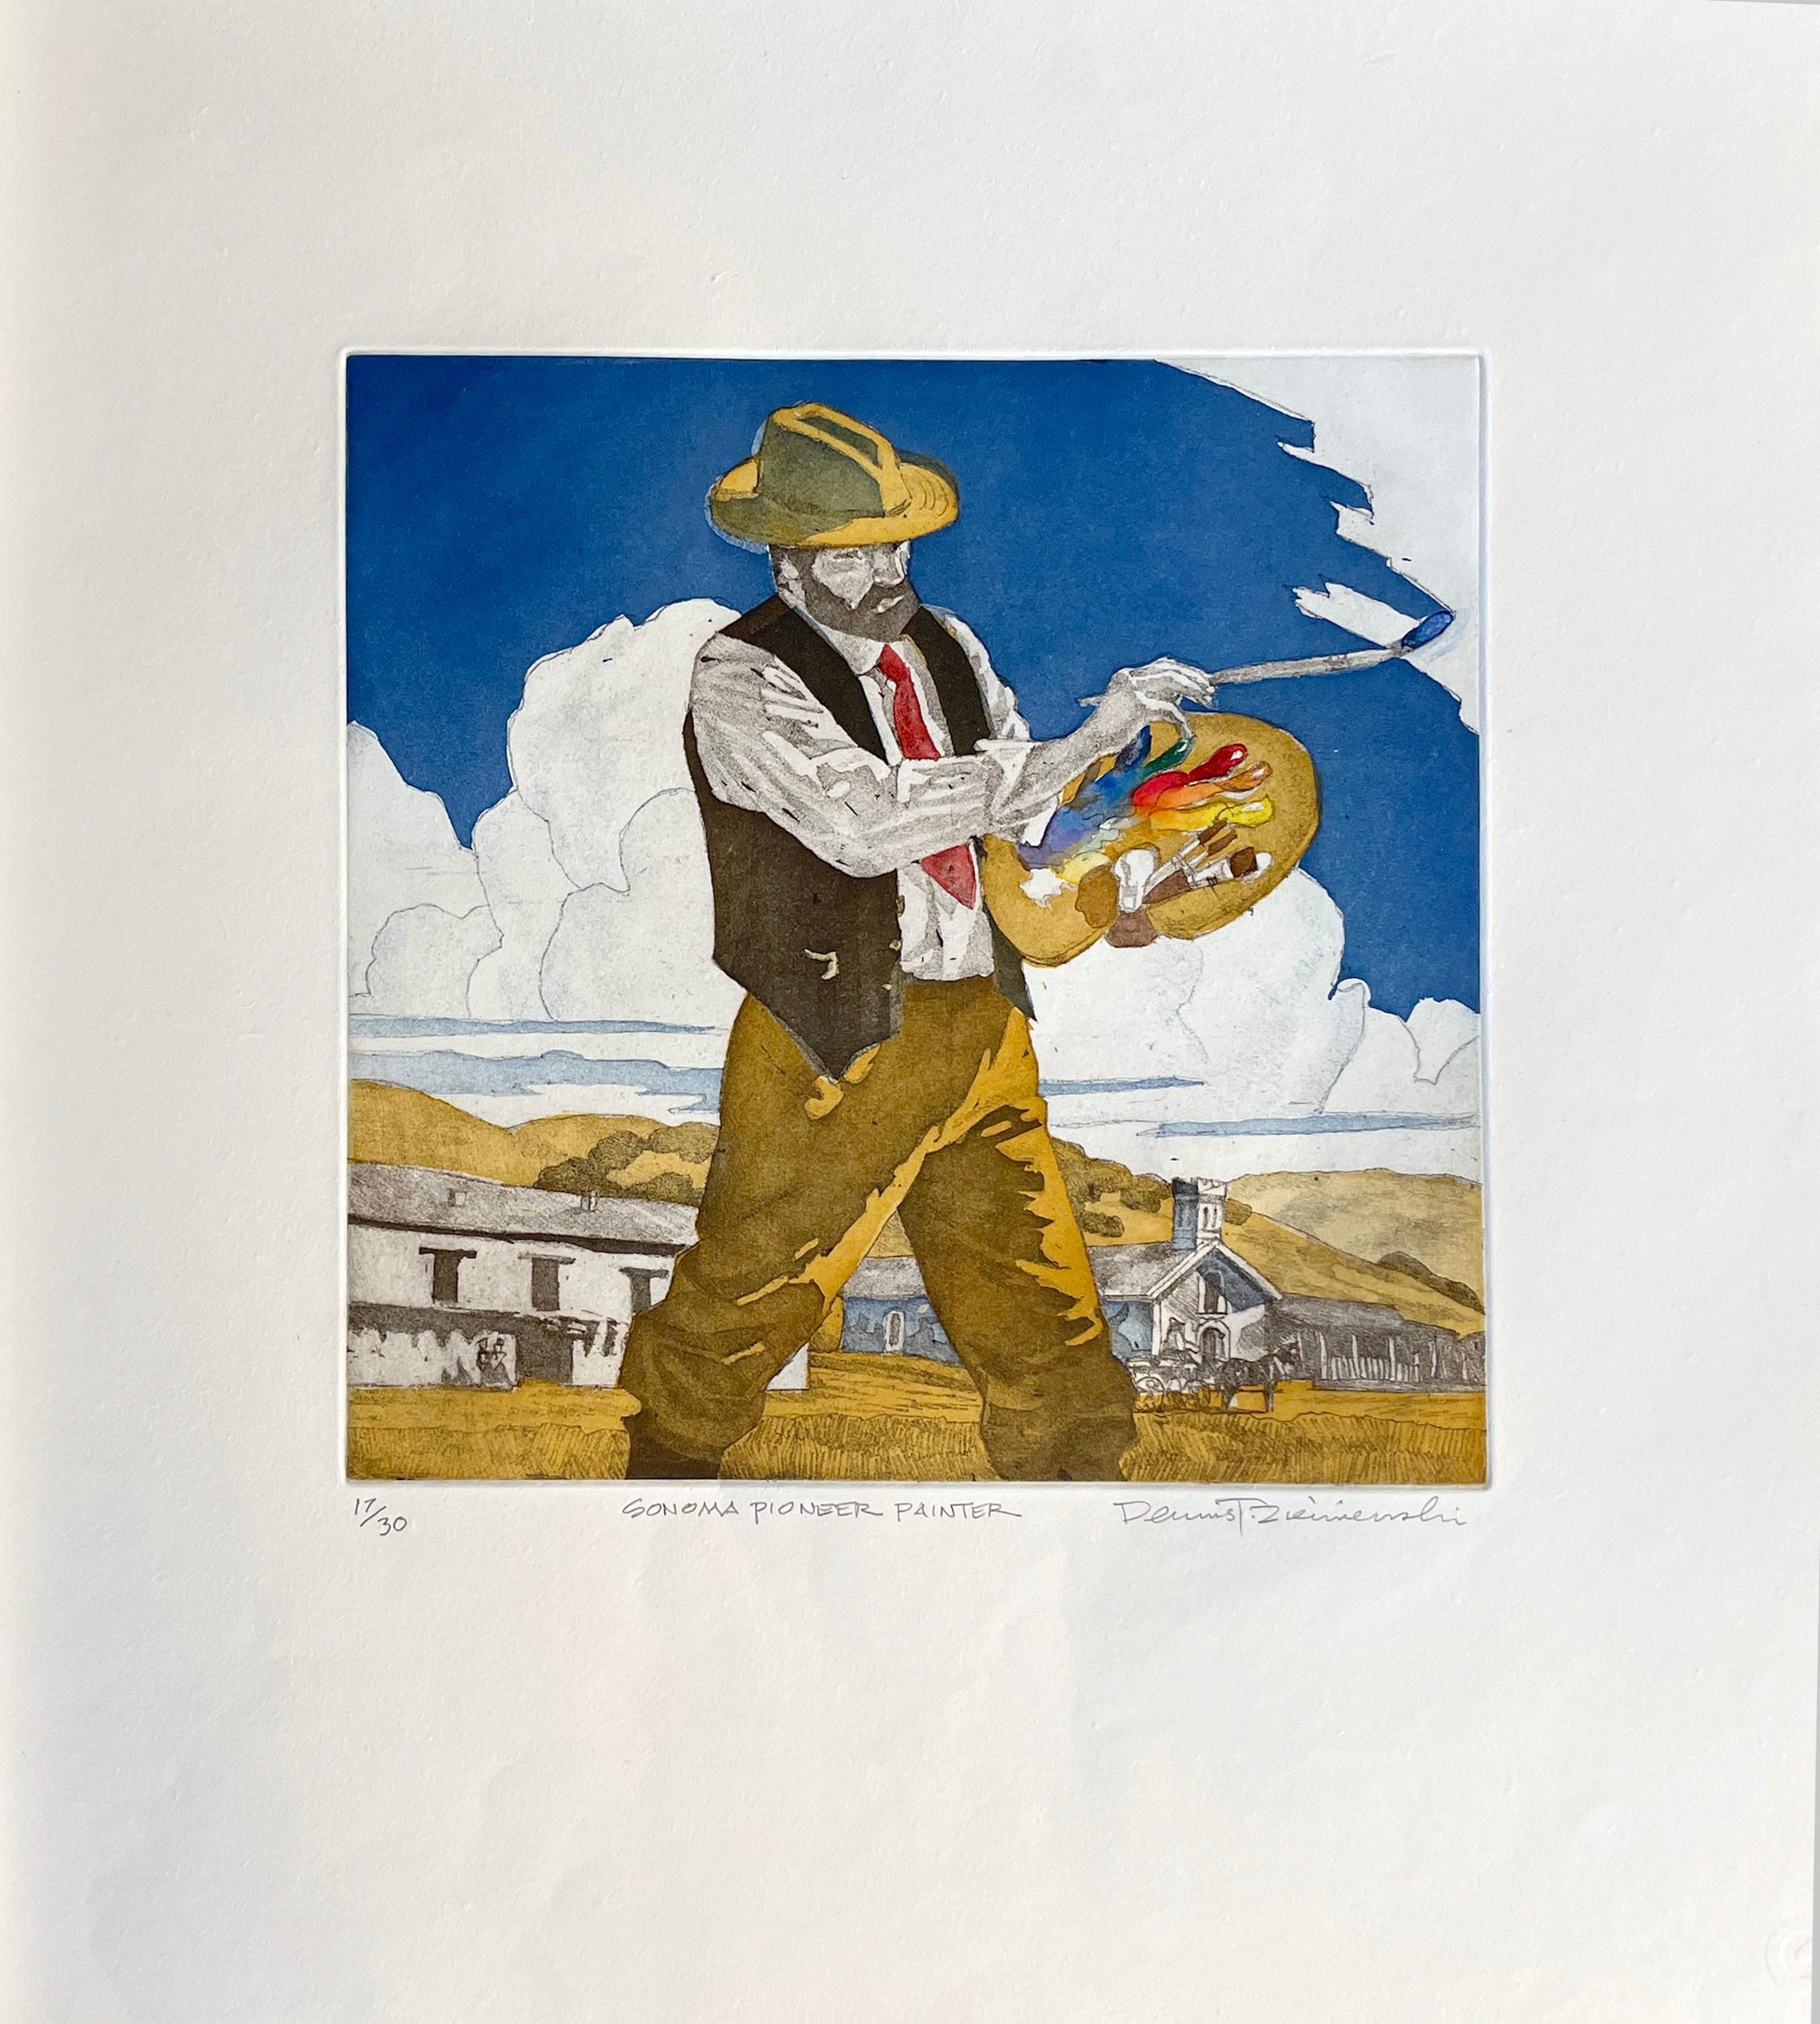 Sonoma Pioneer Painter - Contemporary Print by Dennis Ziemienski